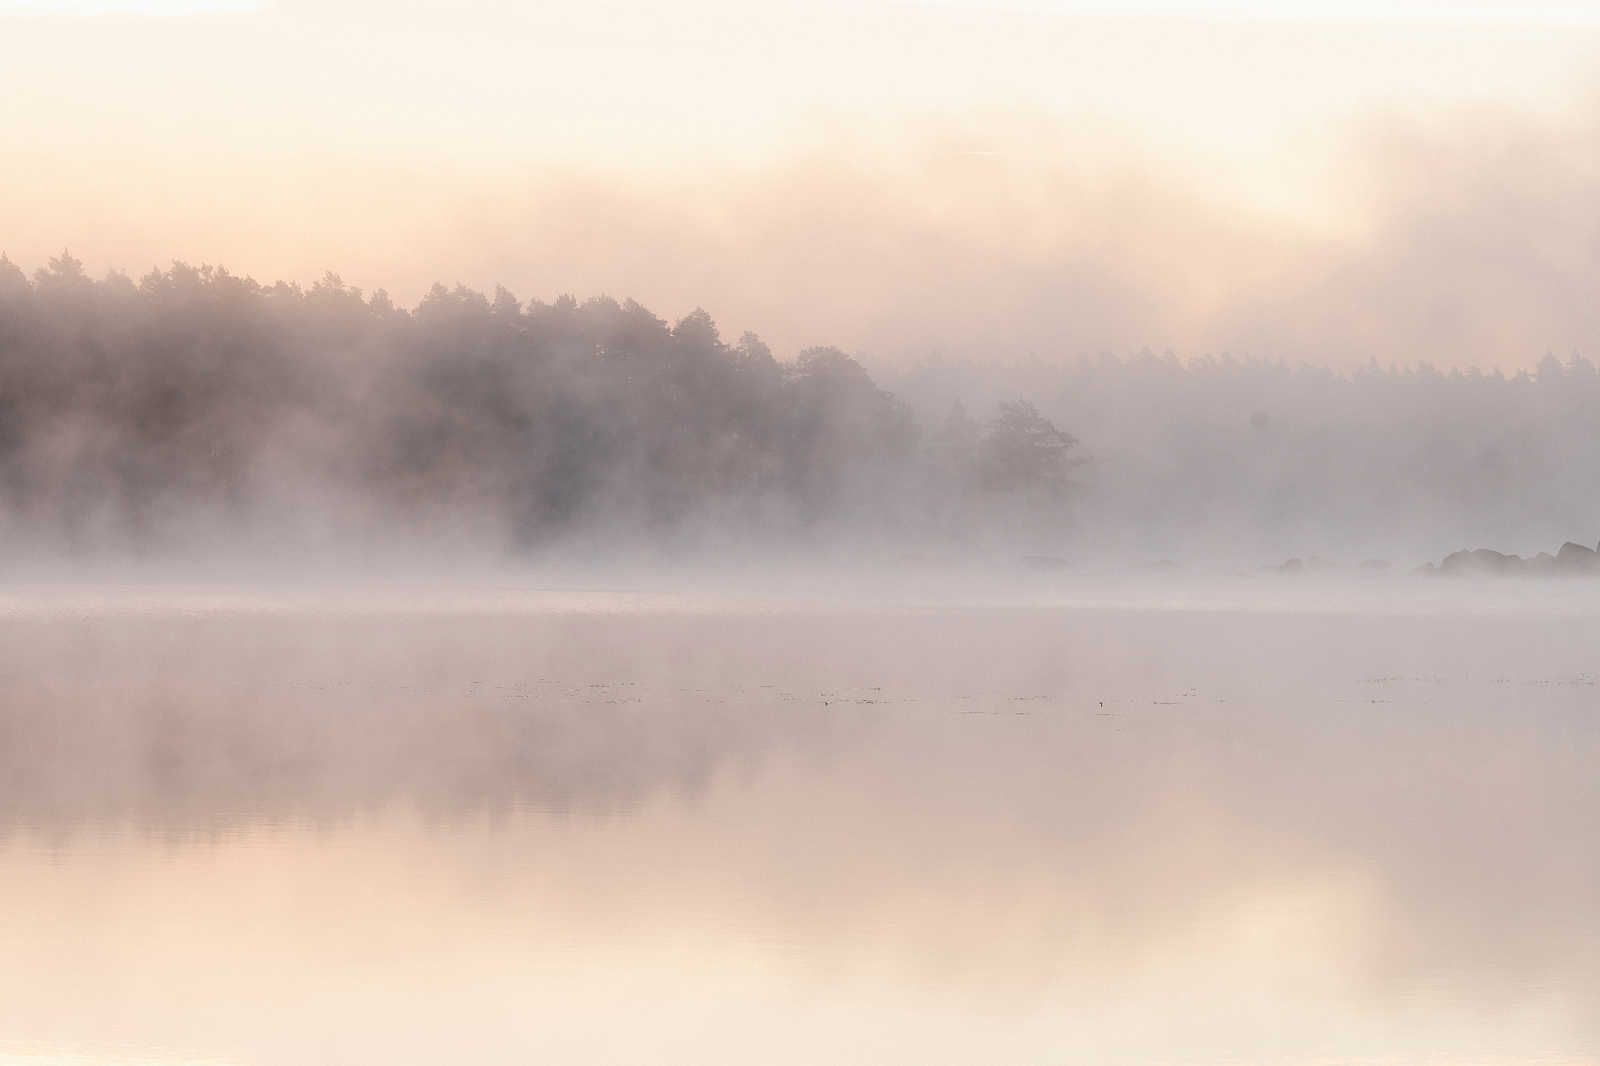             Avalon 2 - Lienzo Lago por la mañana con bruma matinal - 0,90 m x 0,60 m
        